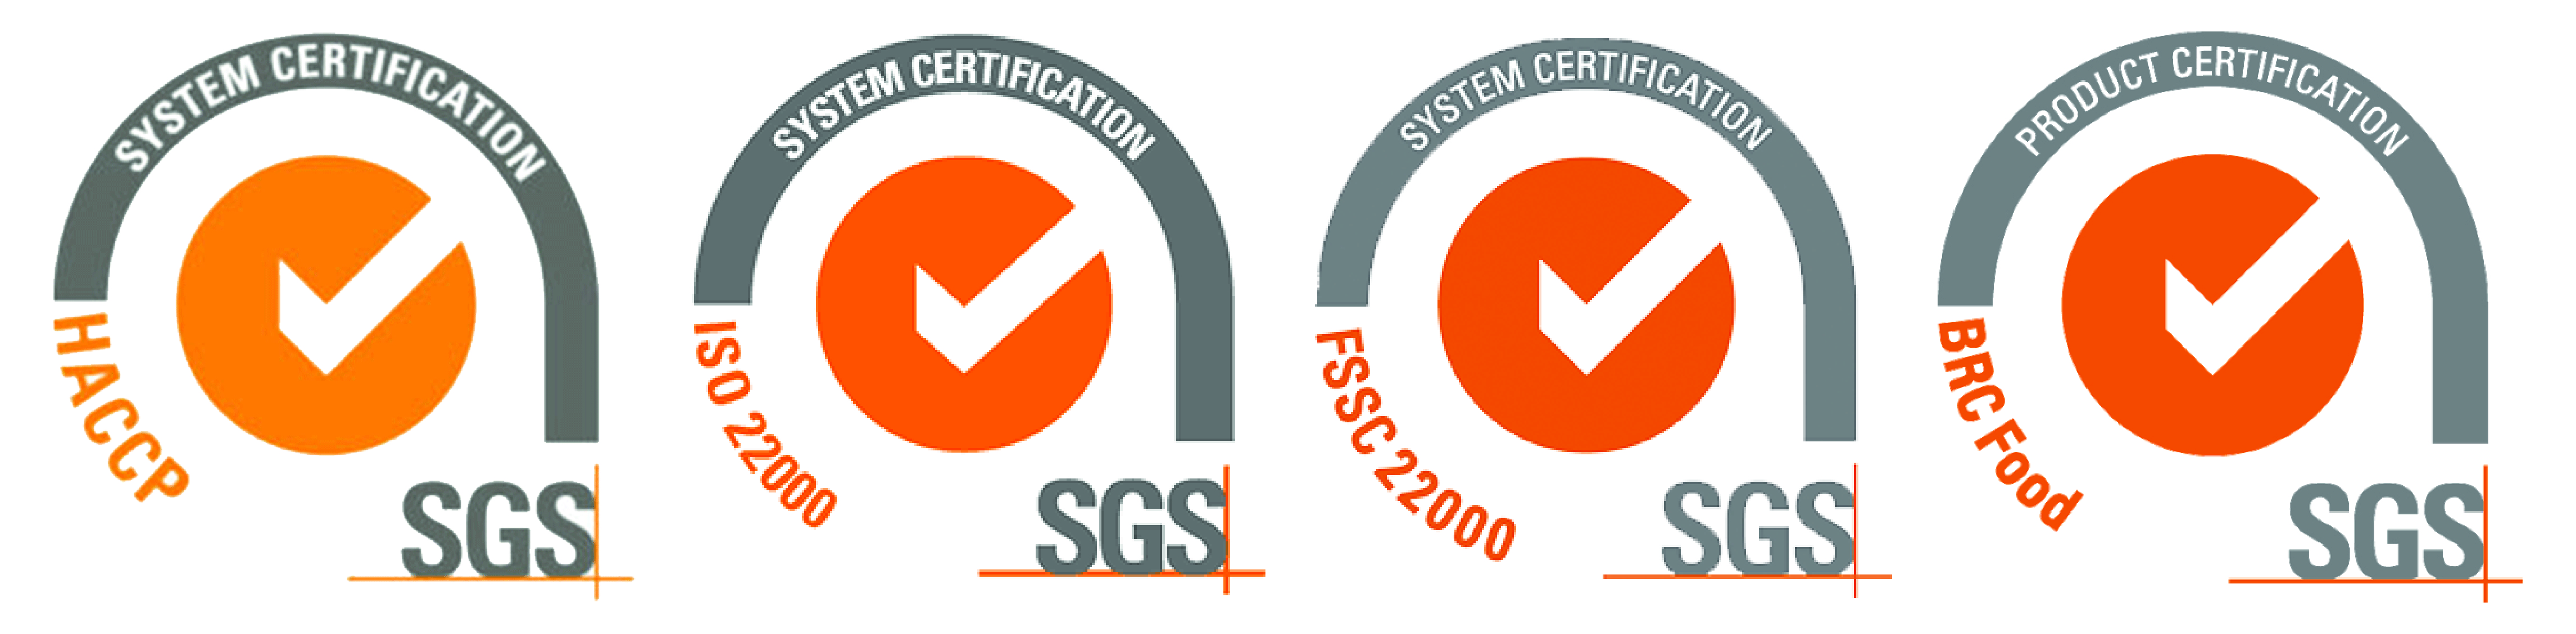 certification logo-01